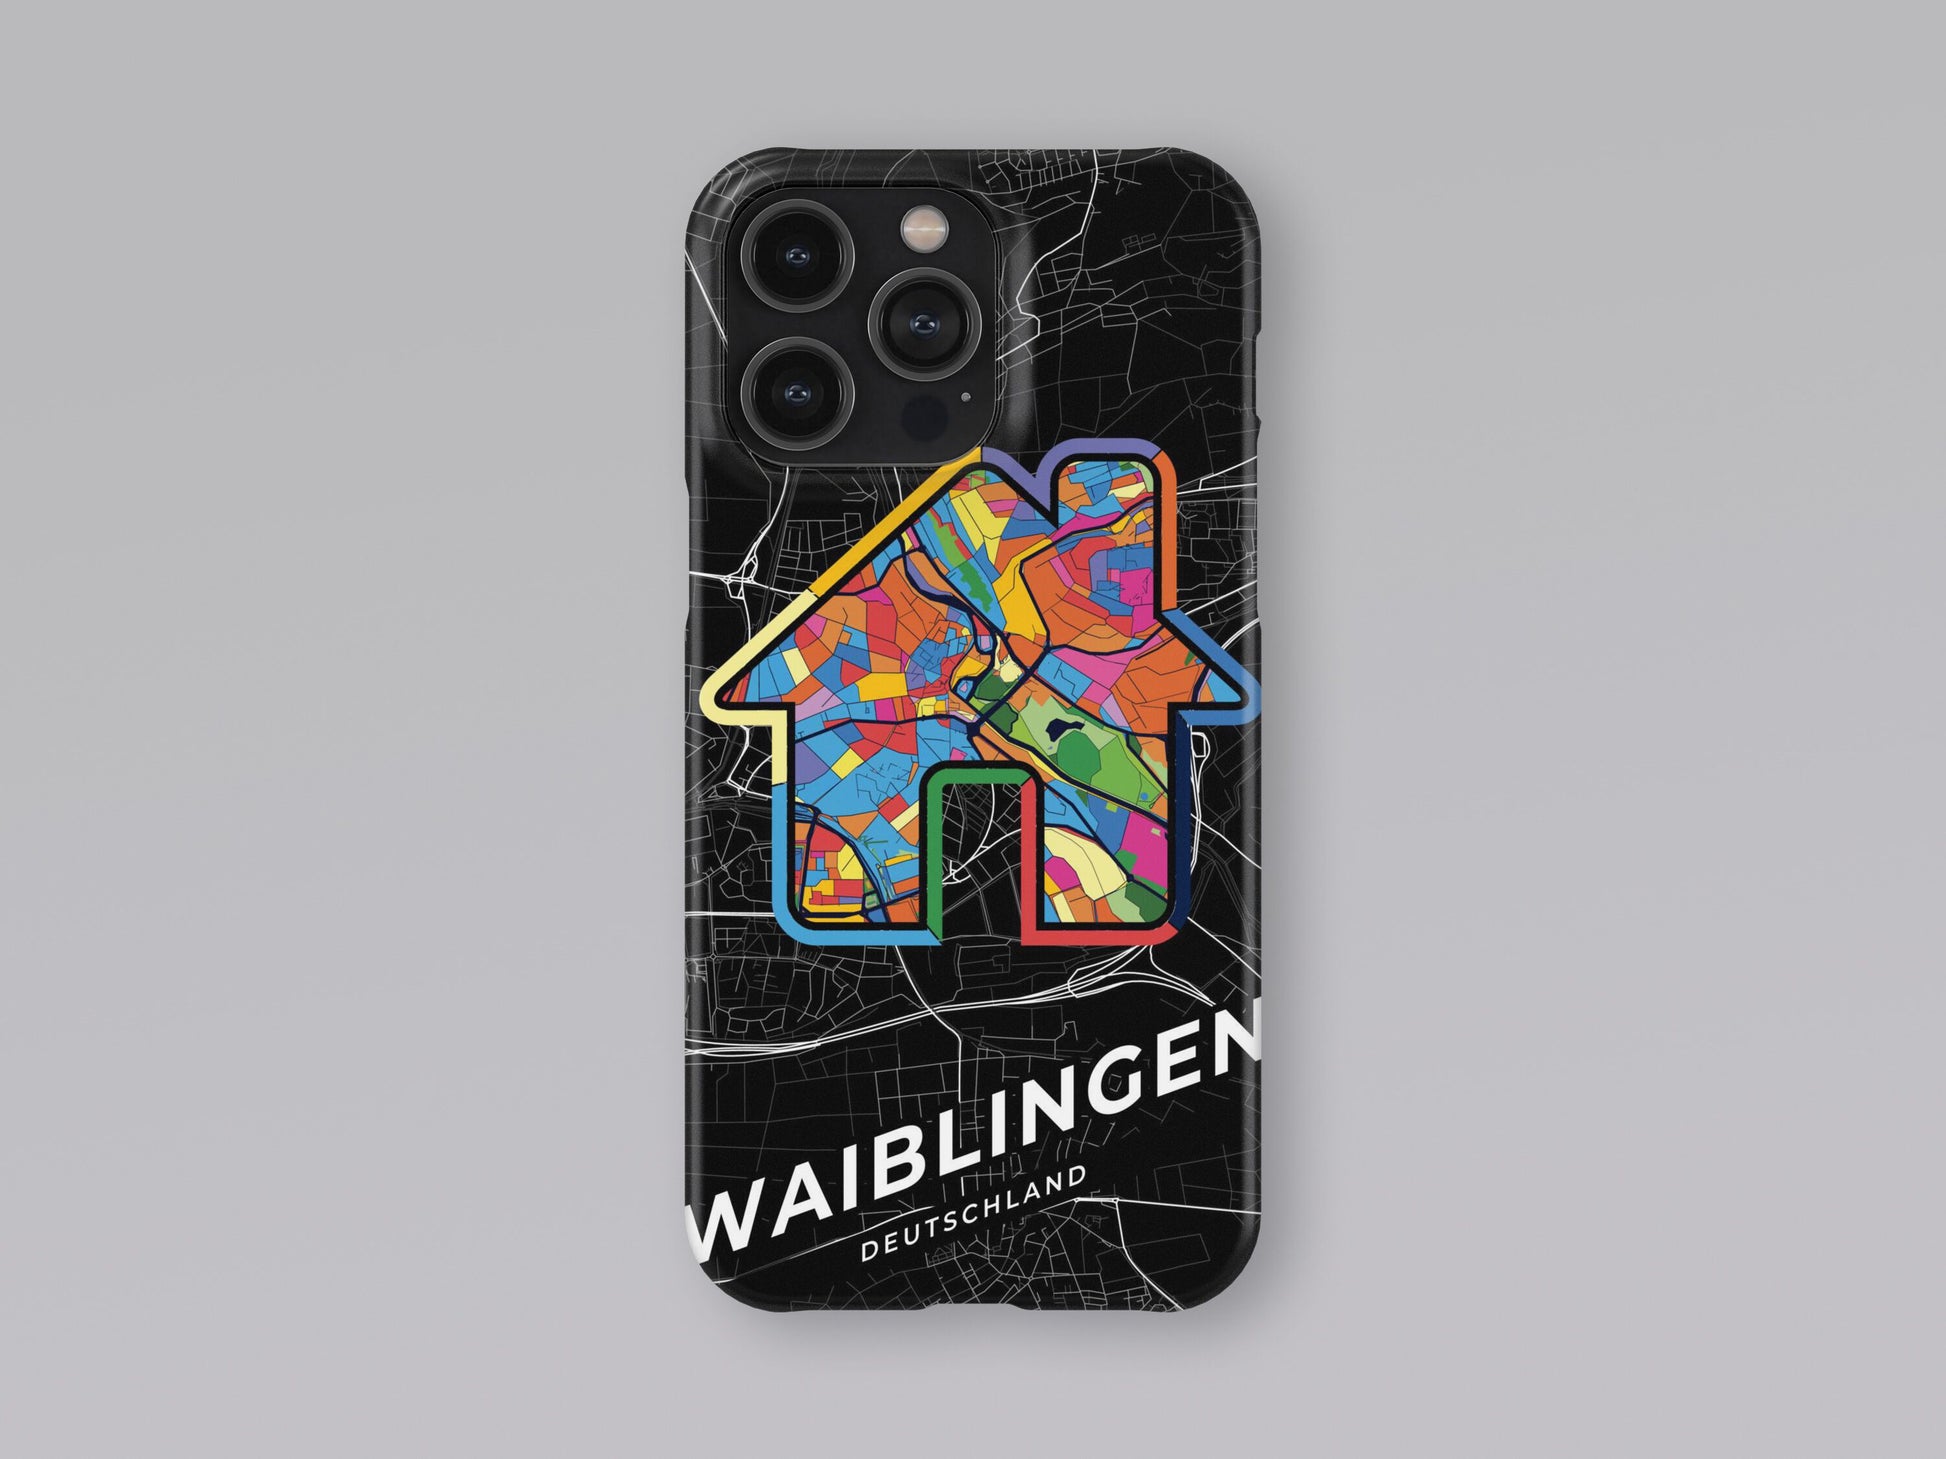 Waiblingen Deutschland slim phone case with colorful icon 3